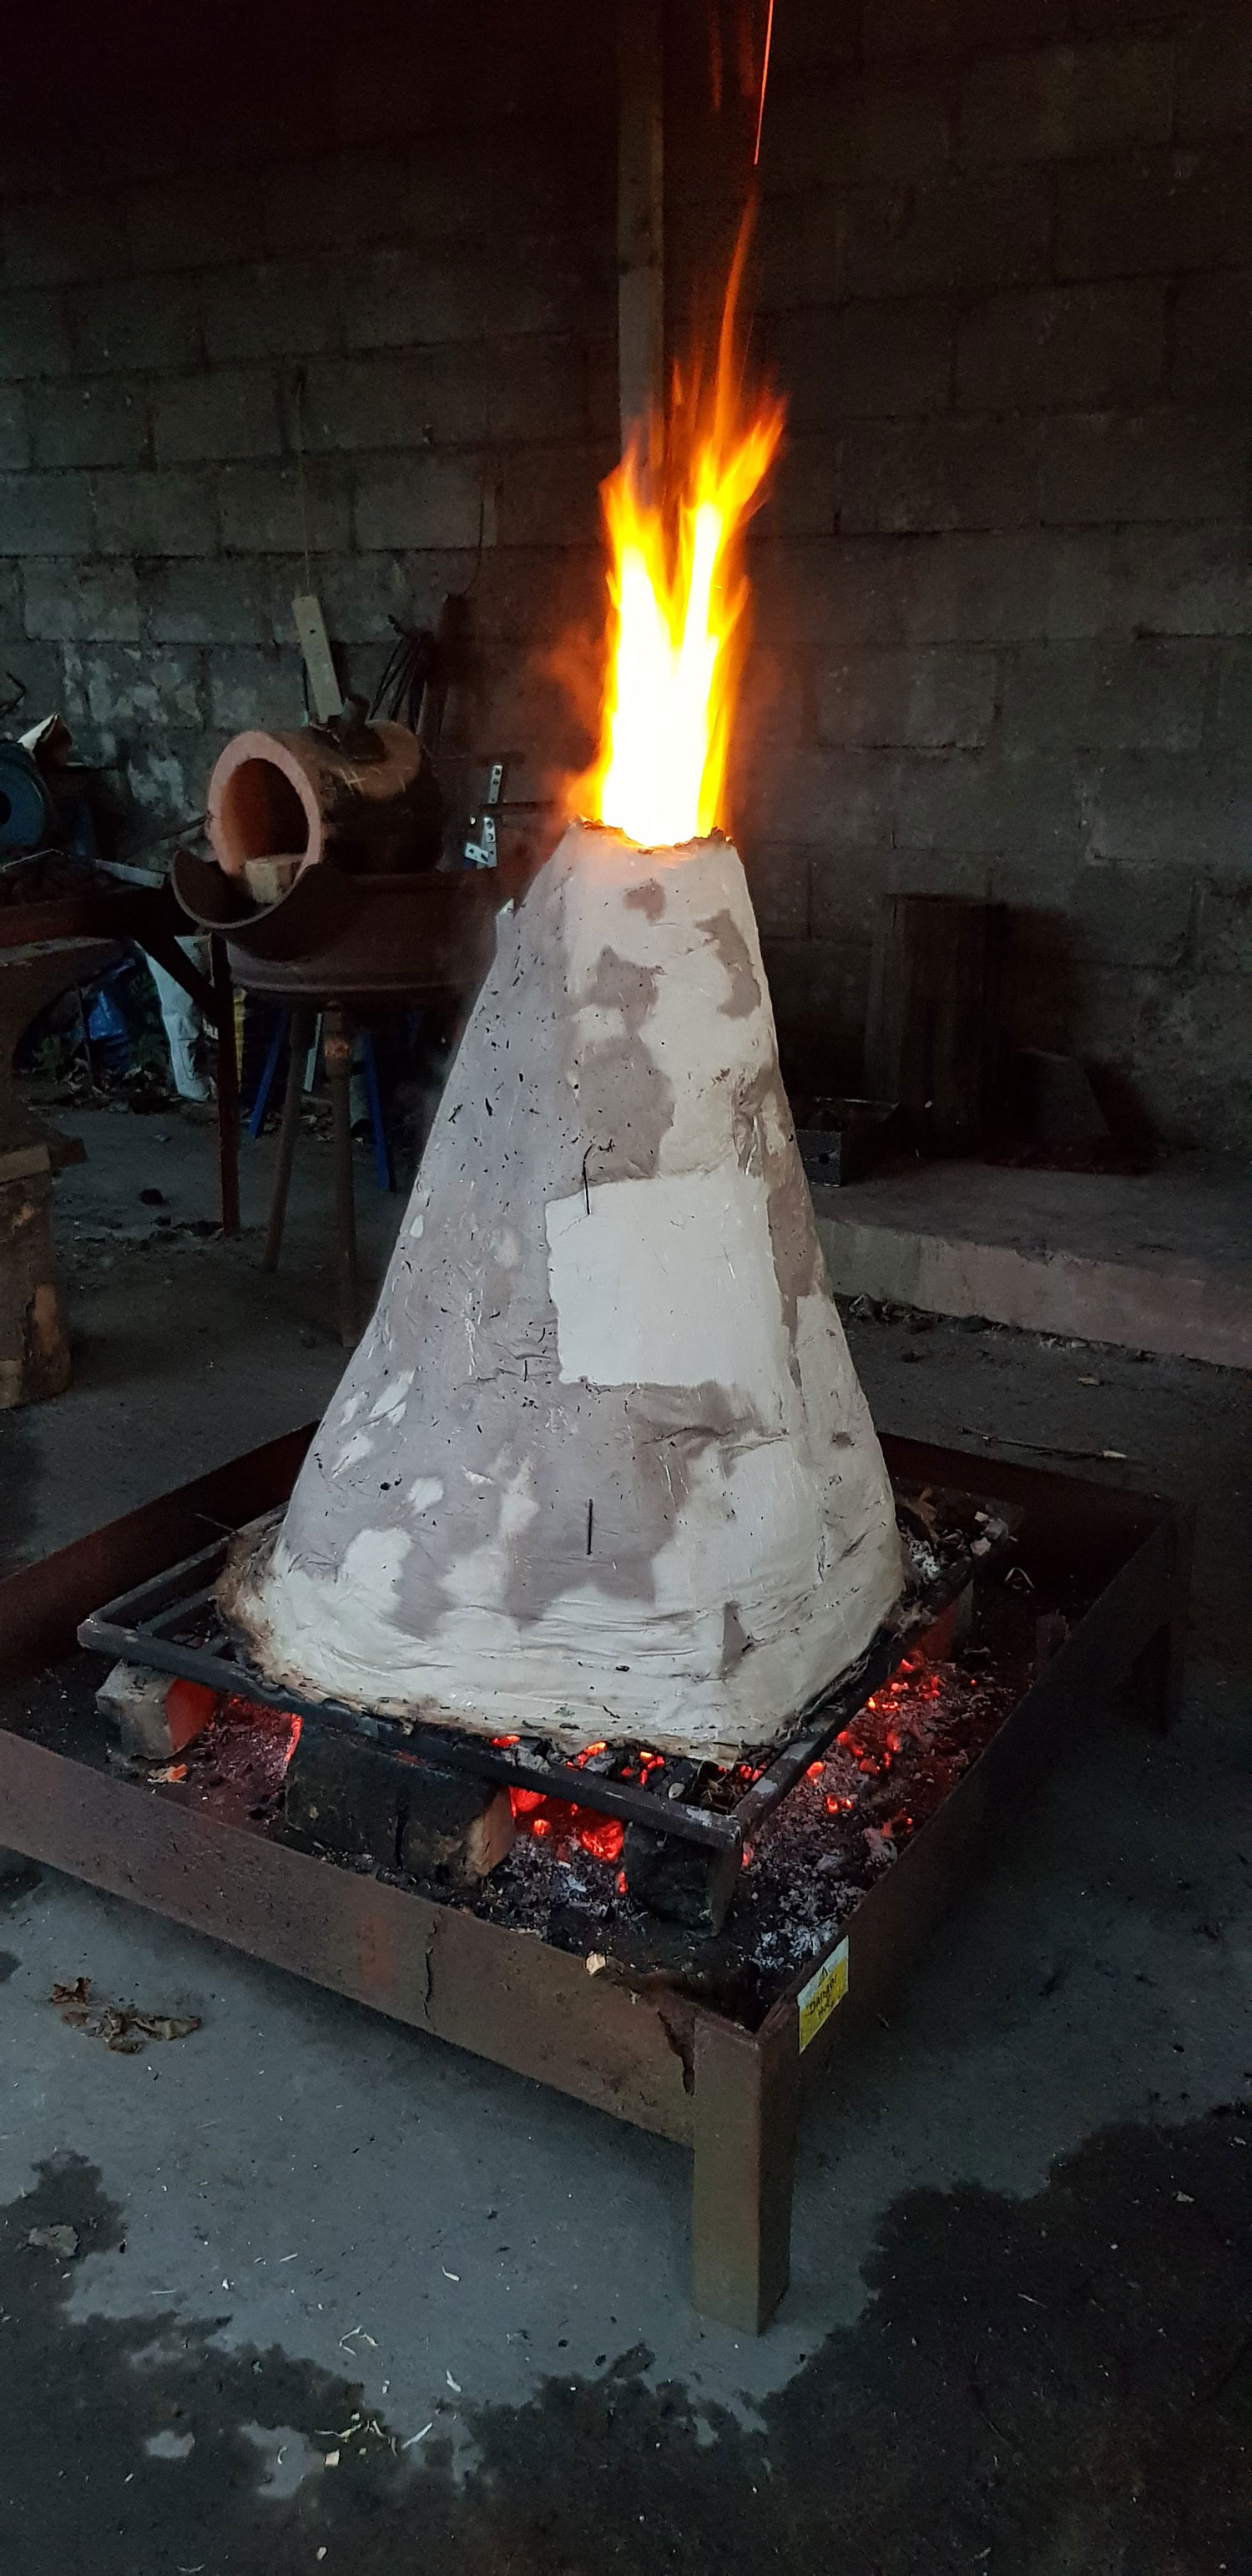 Firing the paper kiln